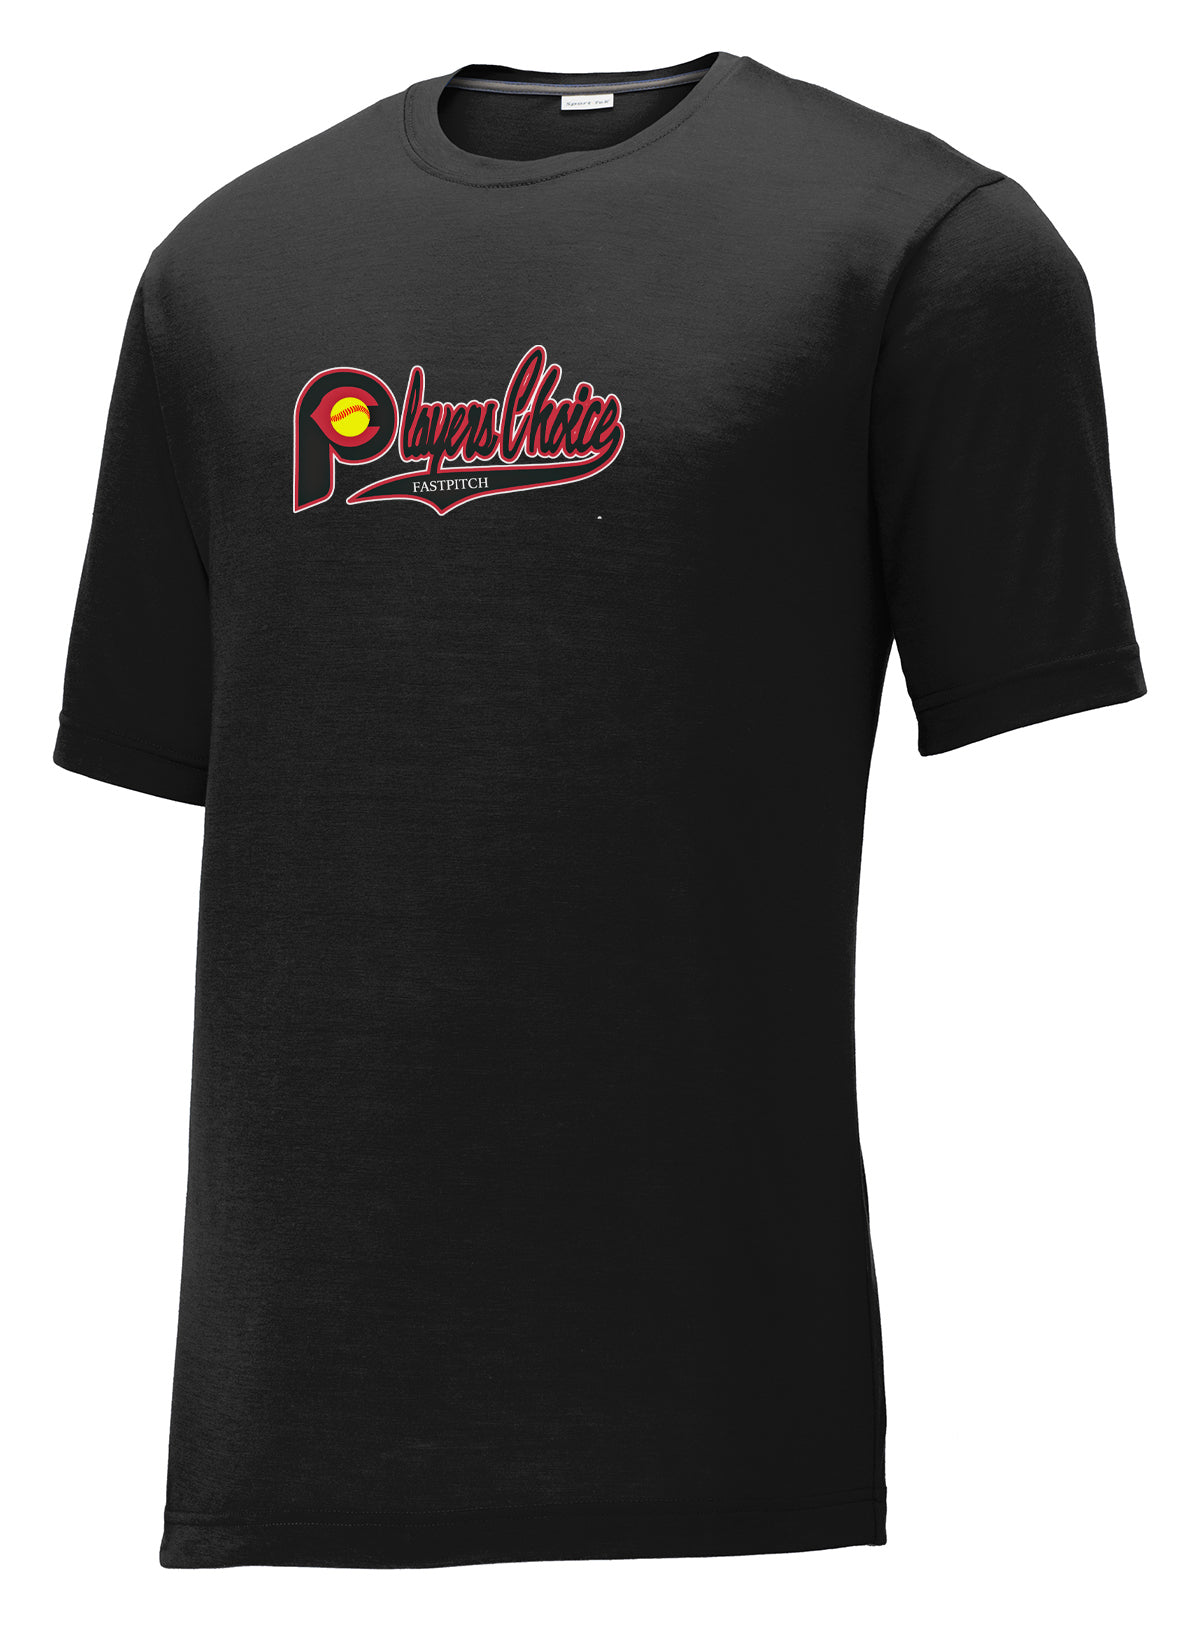 Player's Choice Academy Softball CottonTouch Performance T-Shirt